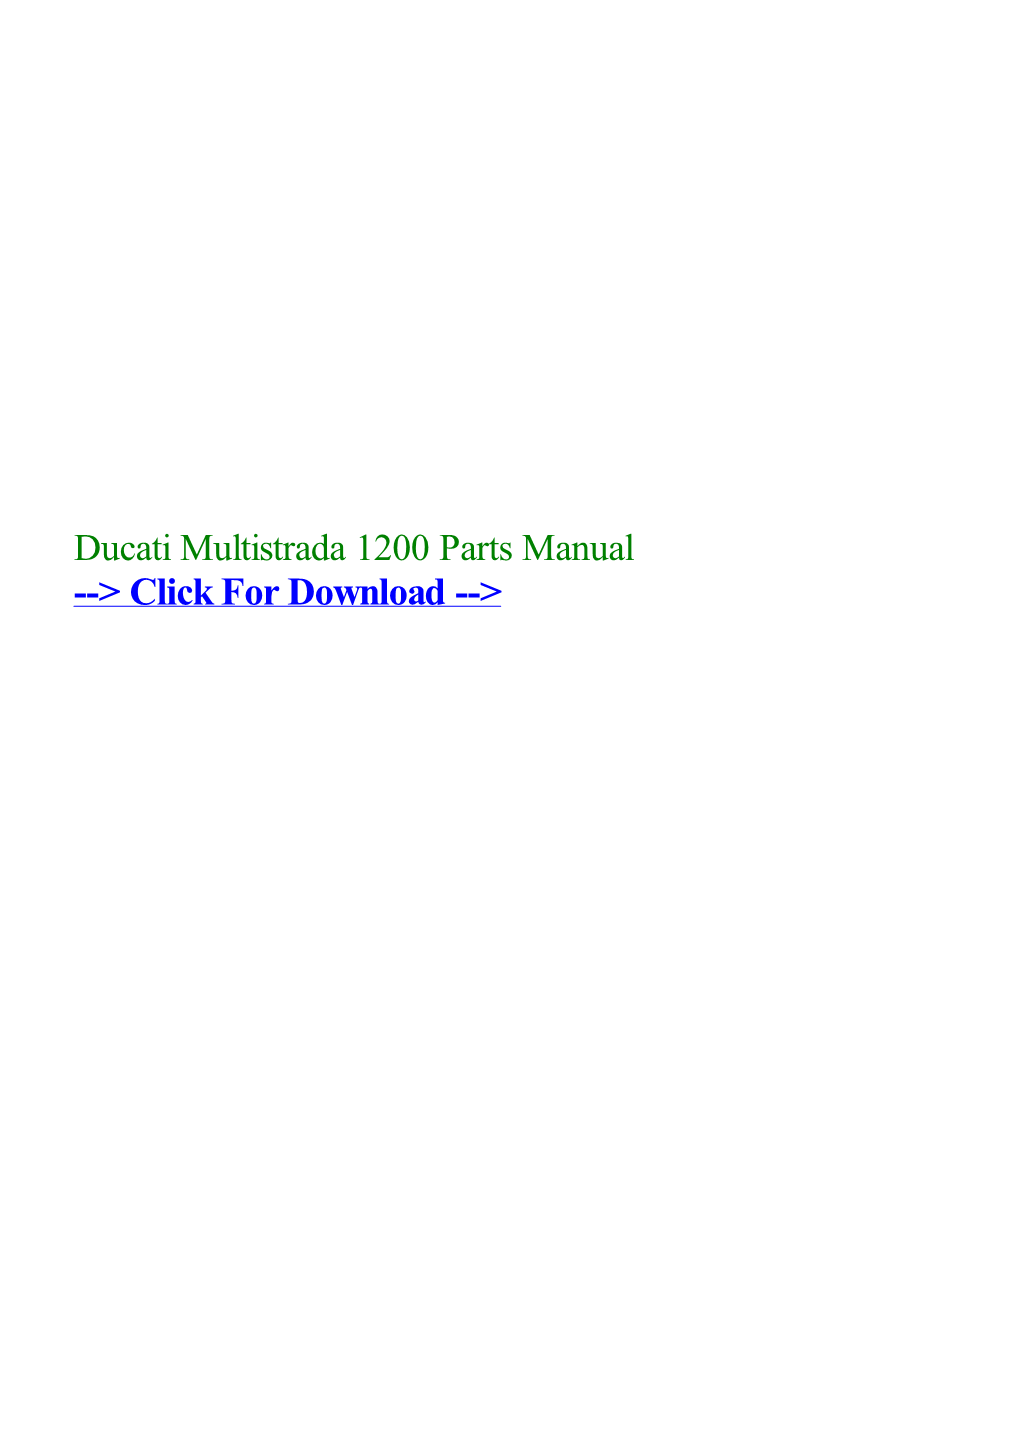 Ducati Multistrada 1200 Parts Manual.Pdf